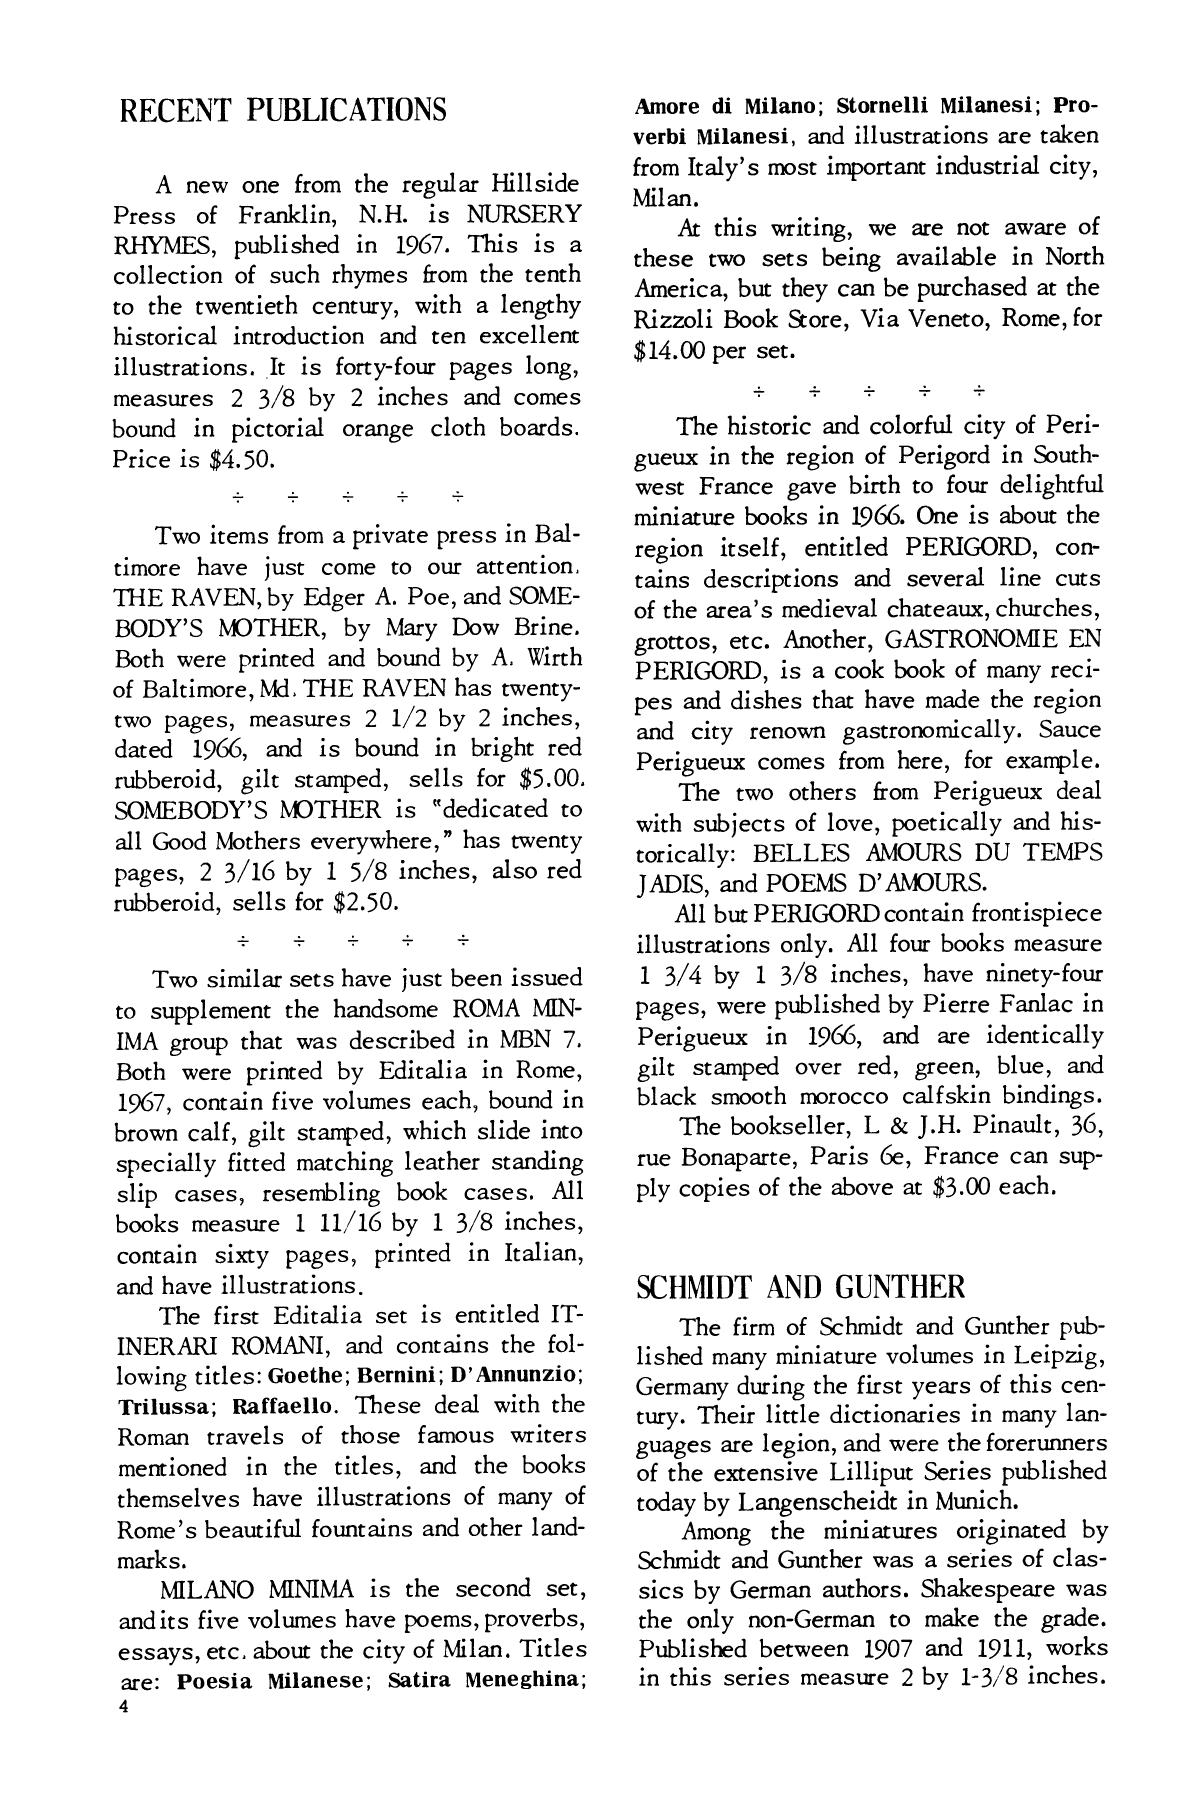 Miniature Book News, Number 9, September 1967
                                                
                                                    4
                                                